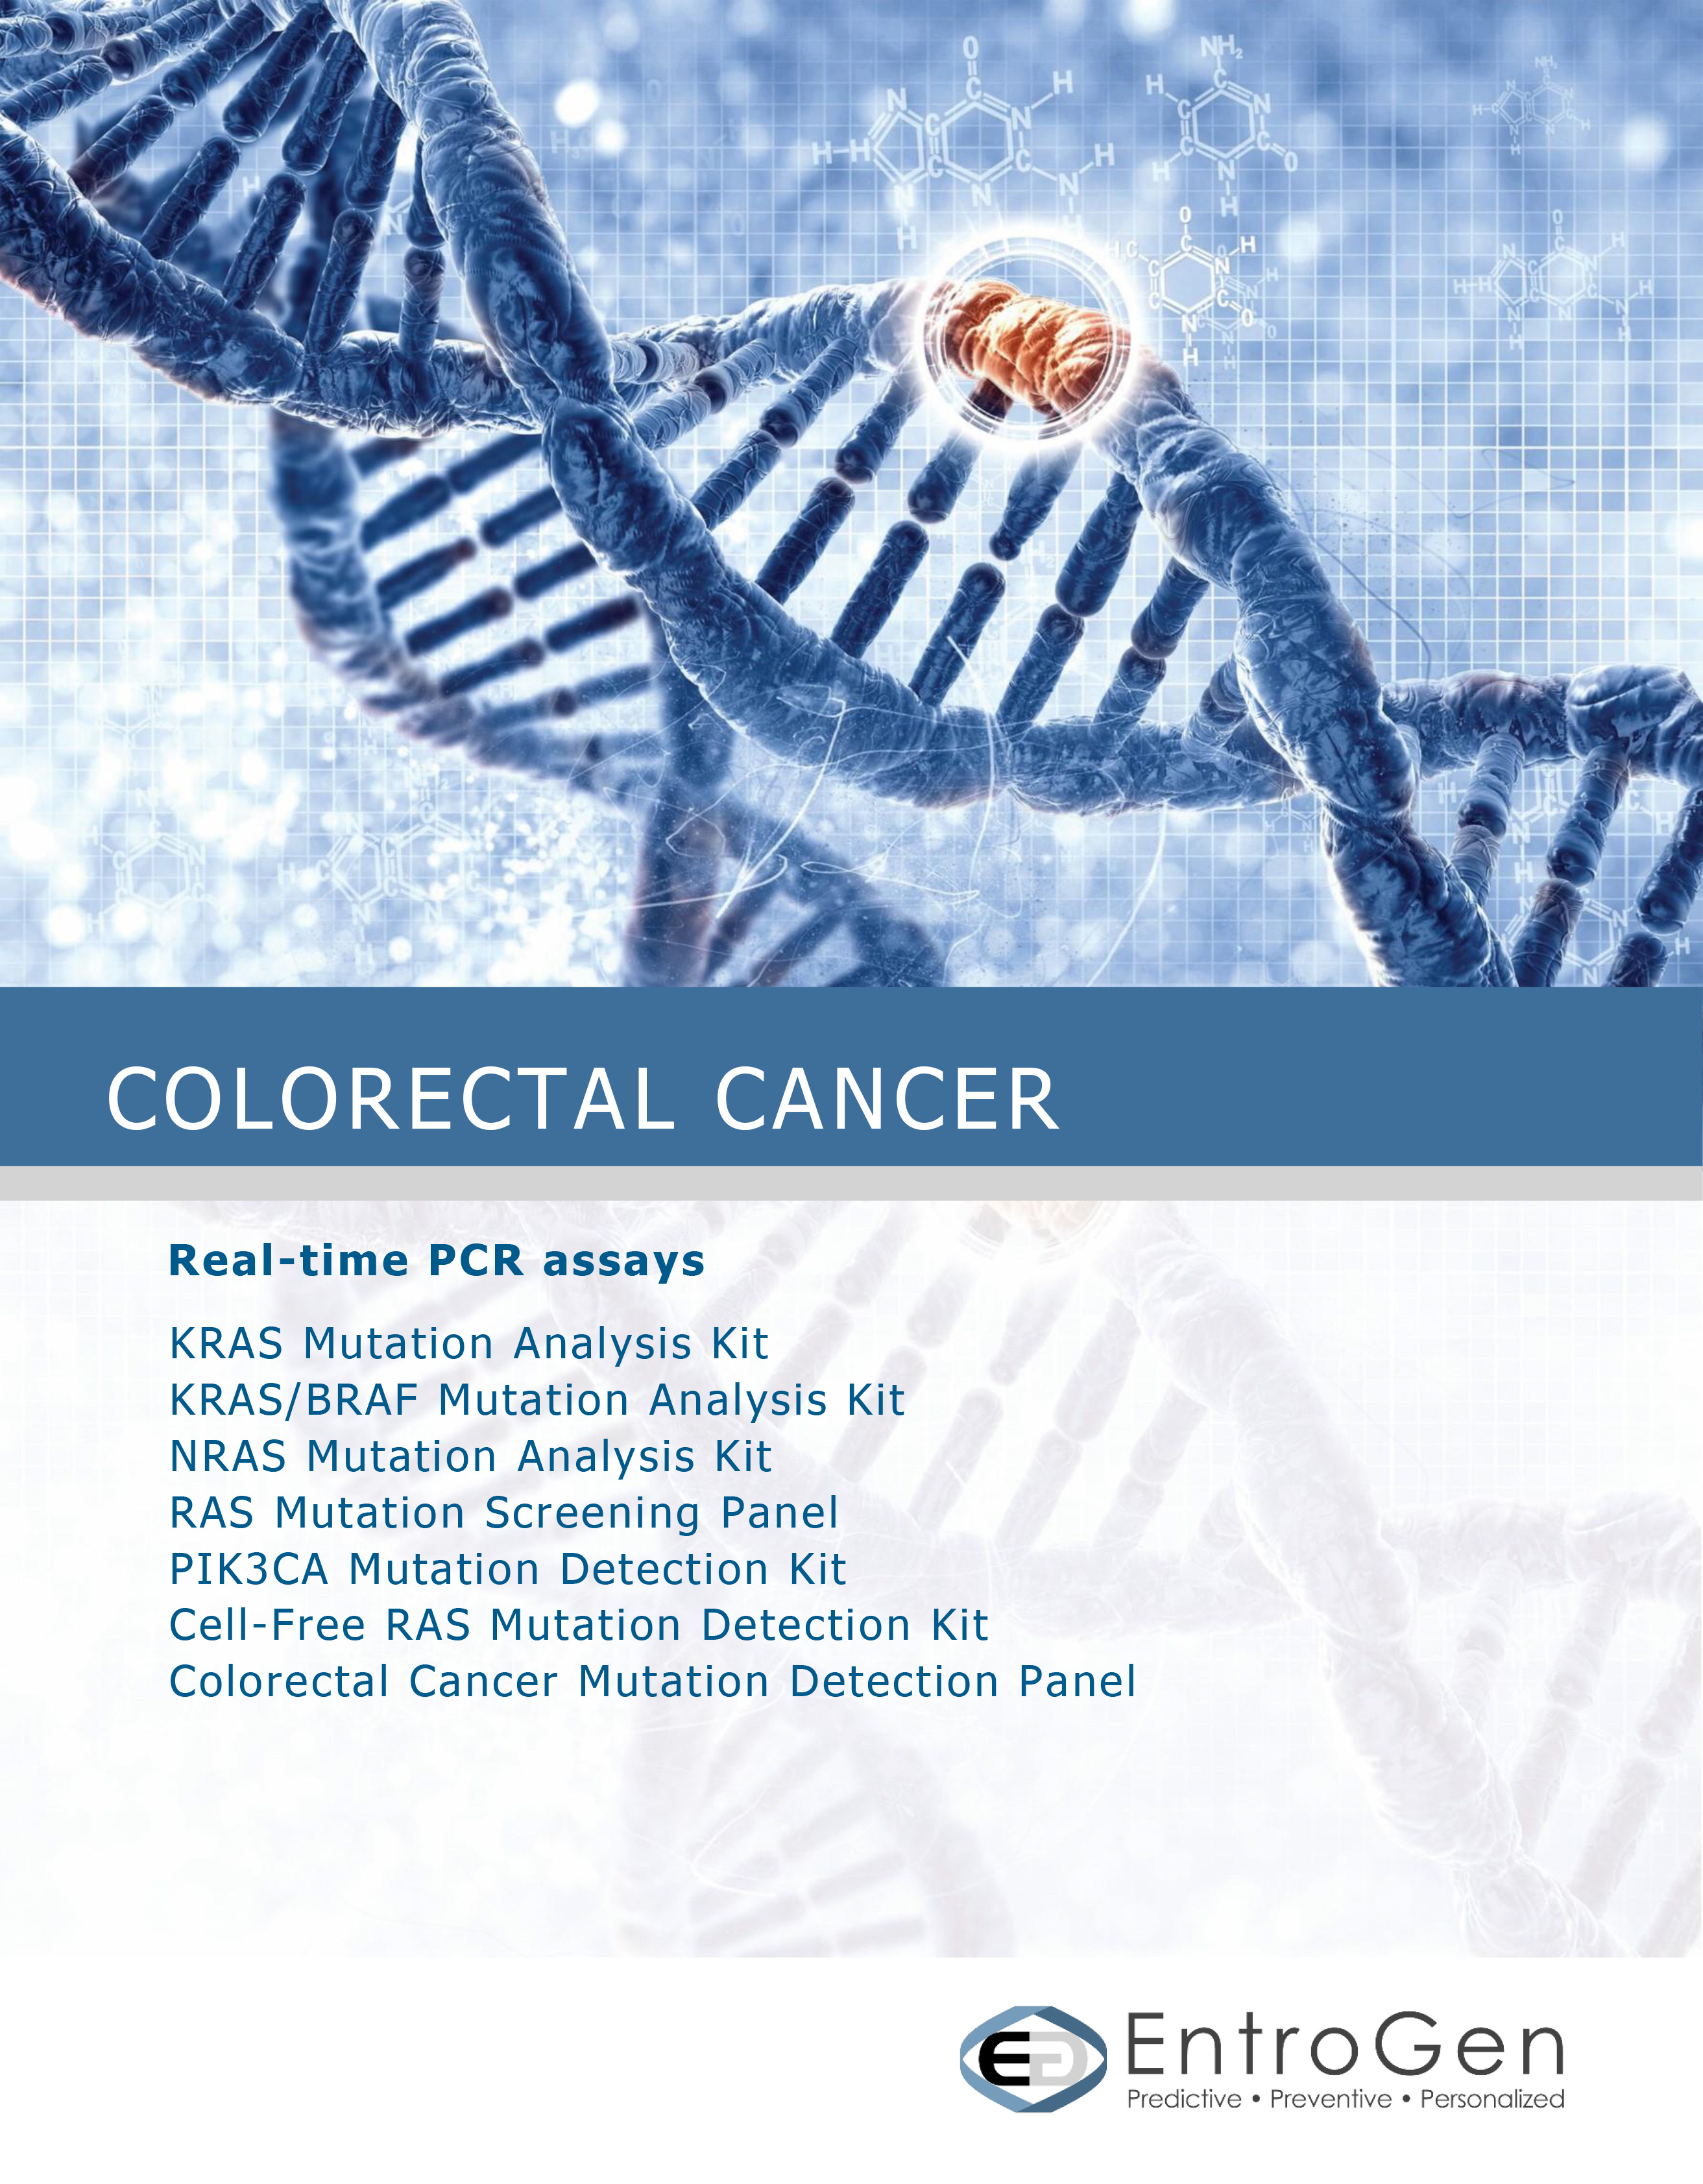 Colorectal Cancer Mutation Detection Panel